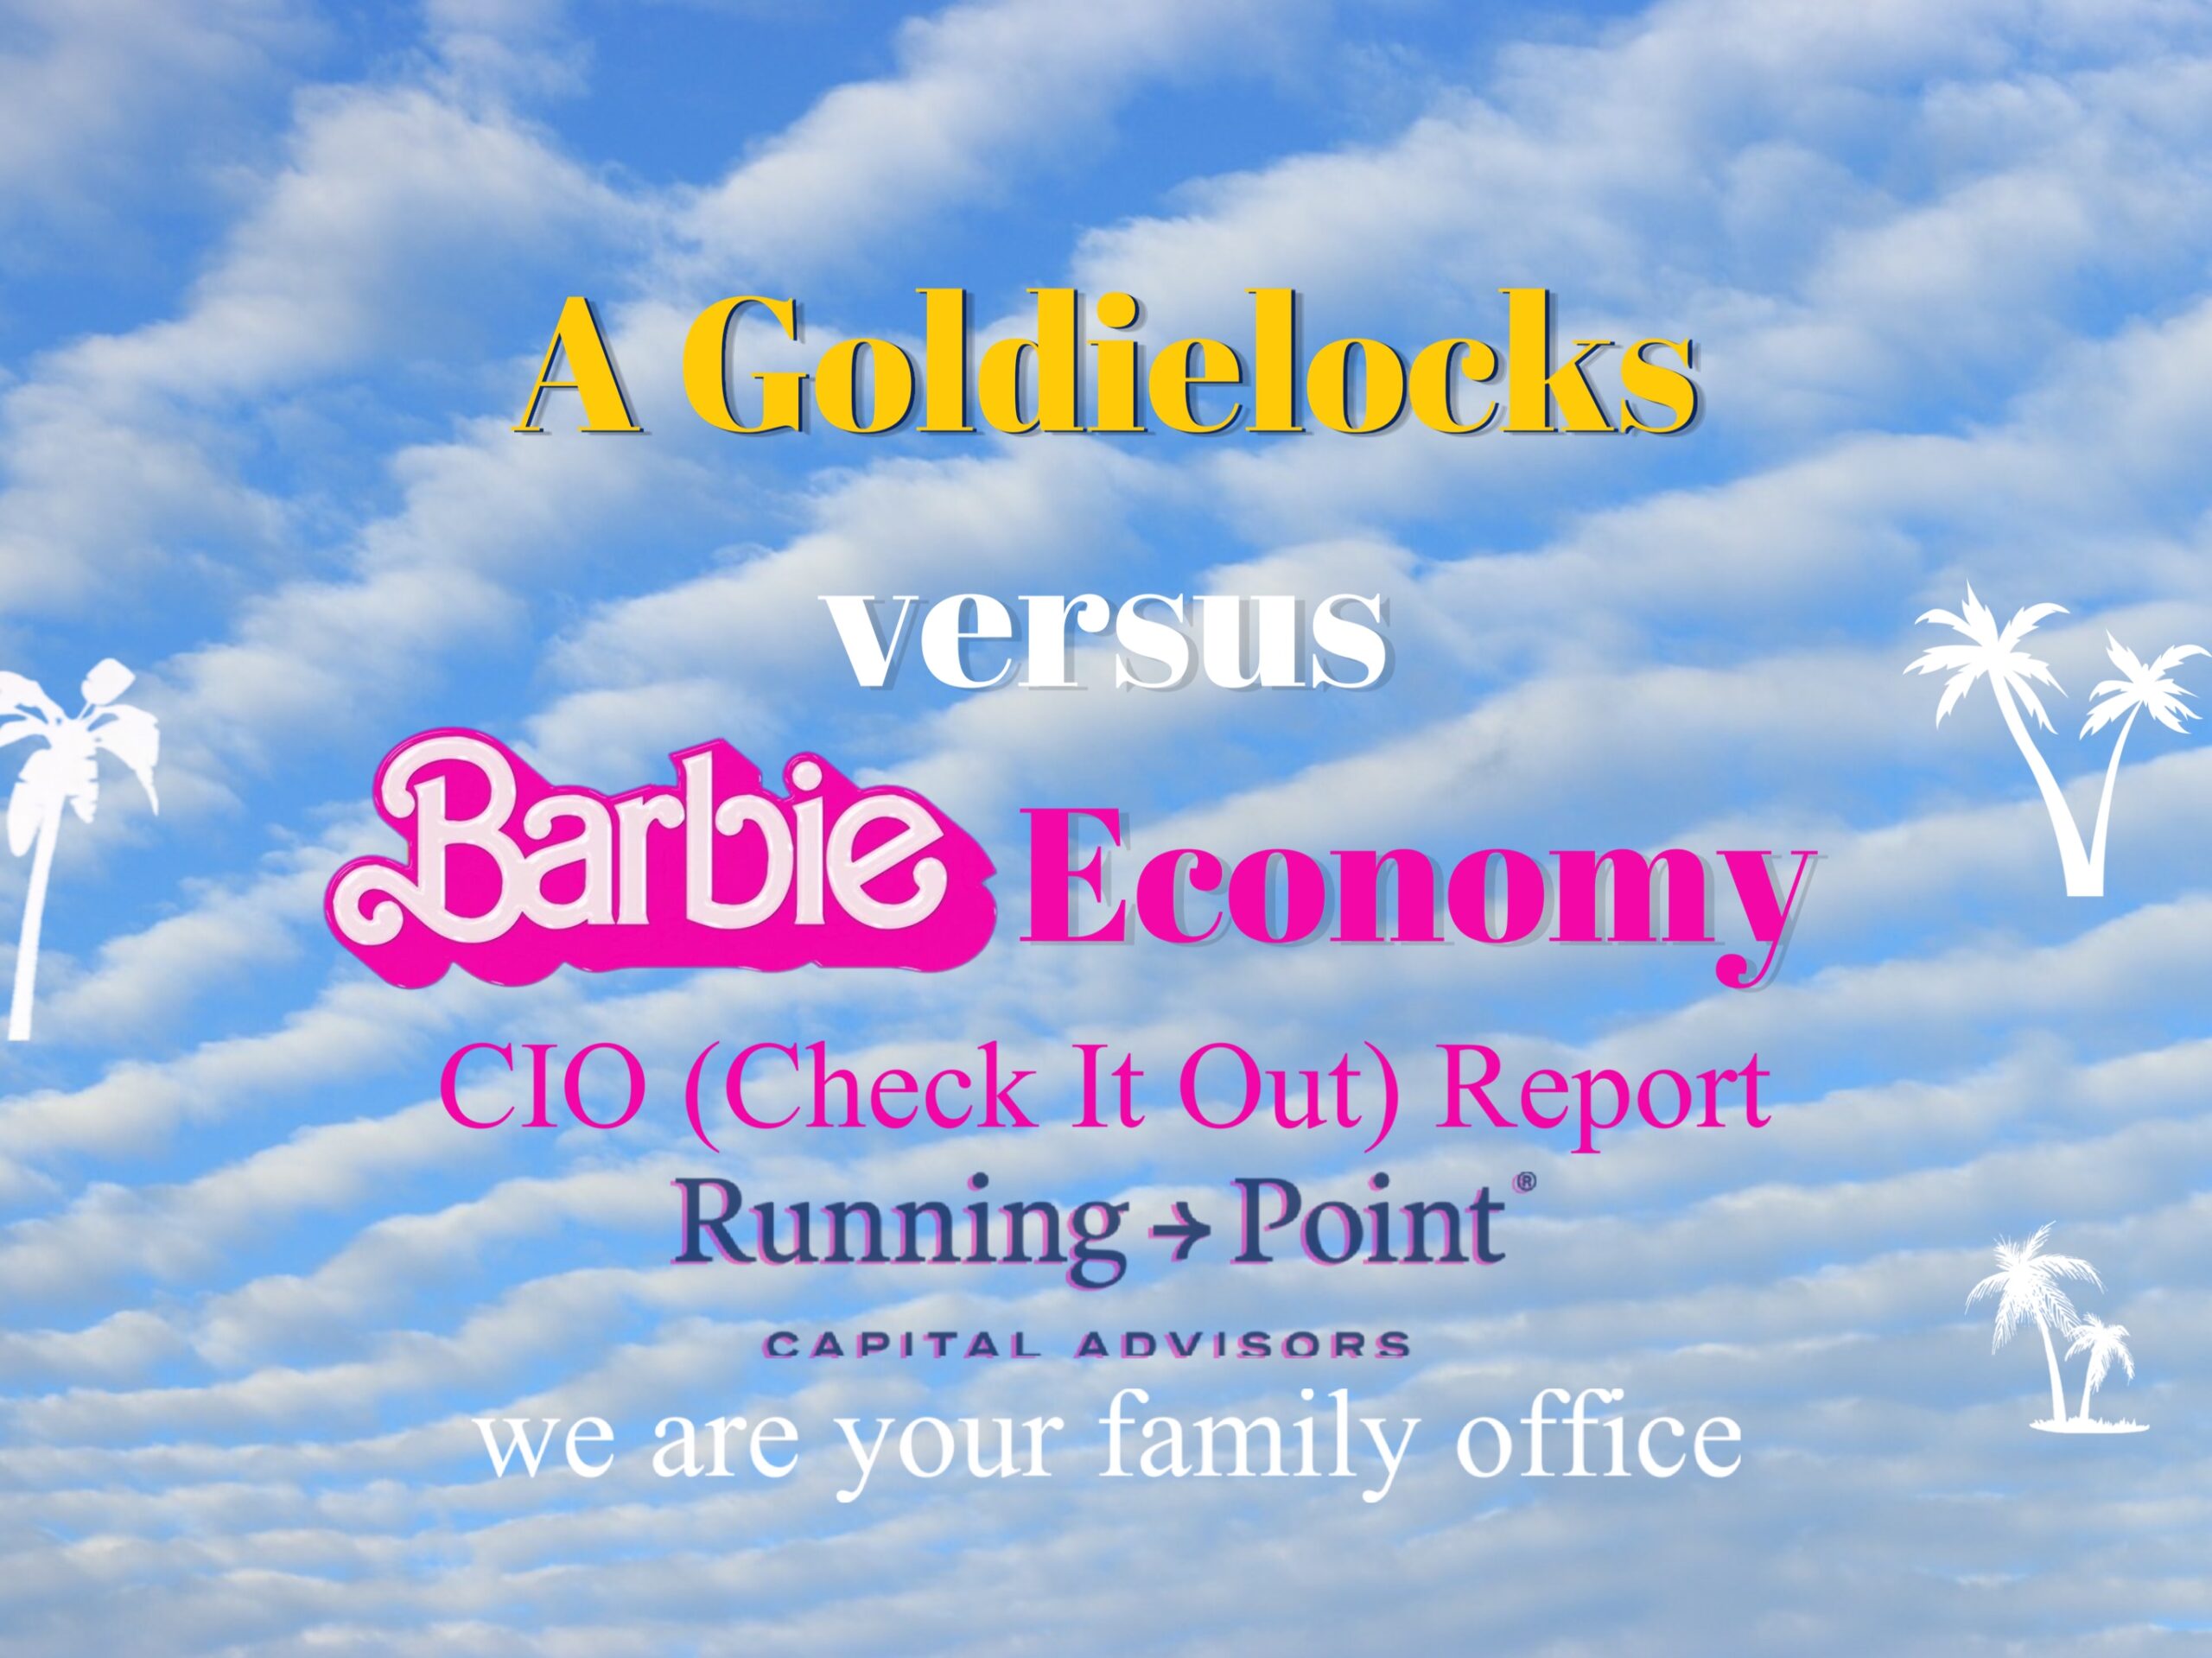 A Goldilocks versus Barbie Economy